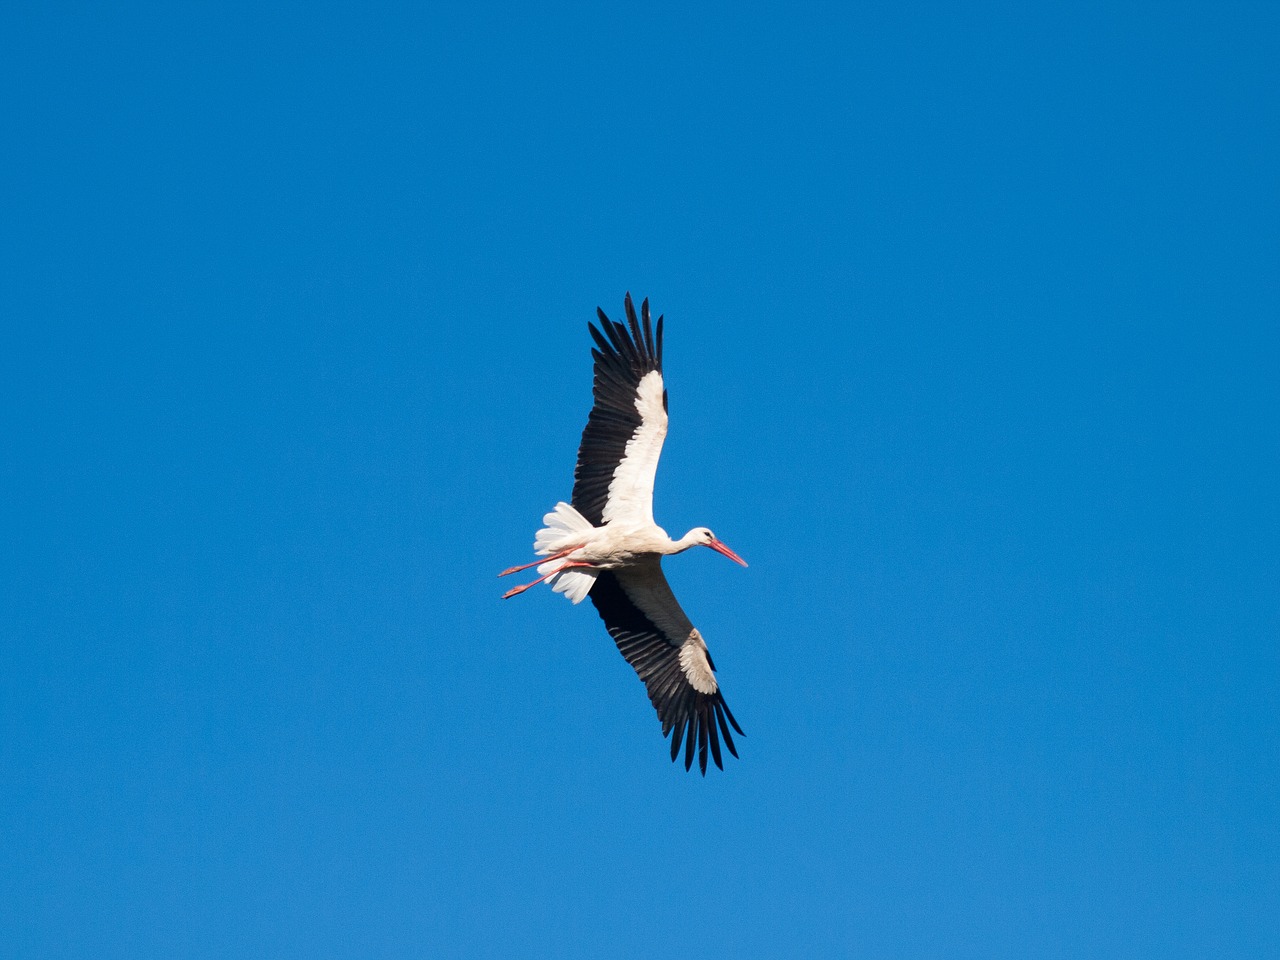 ave stork flight free photo